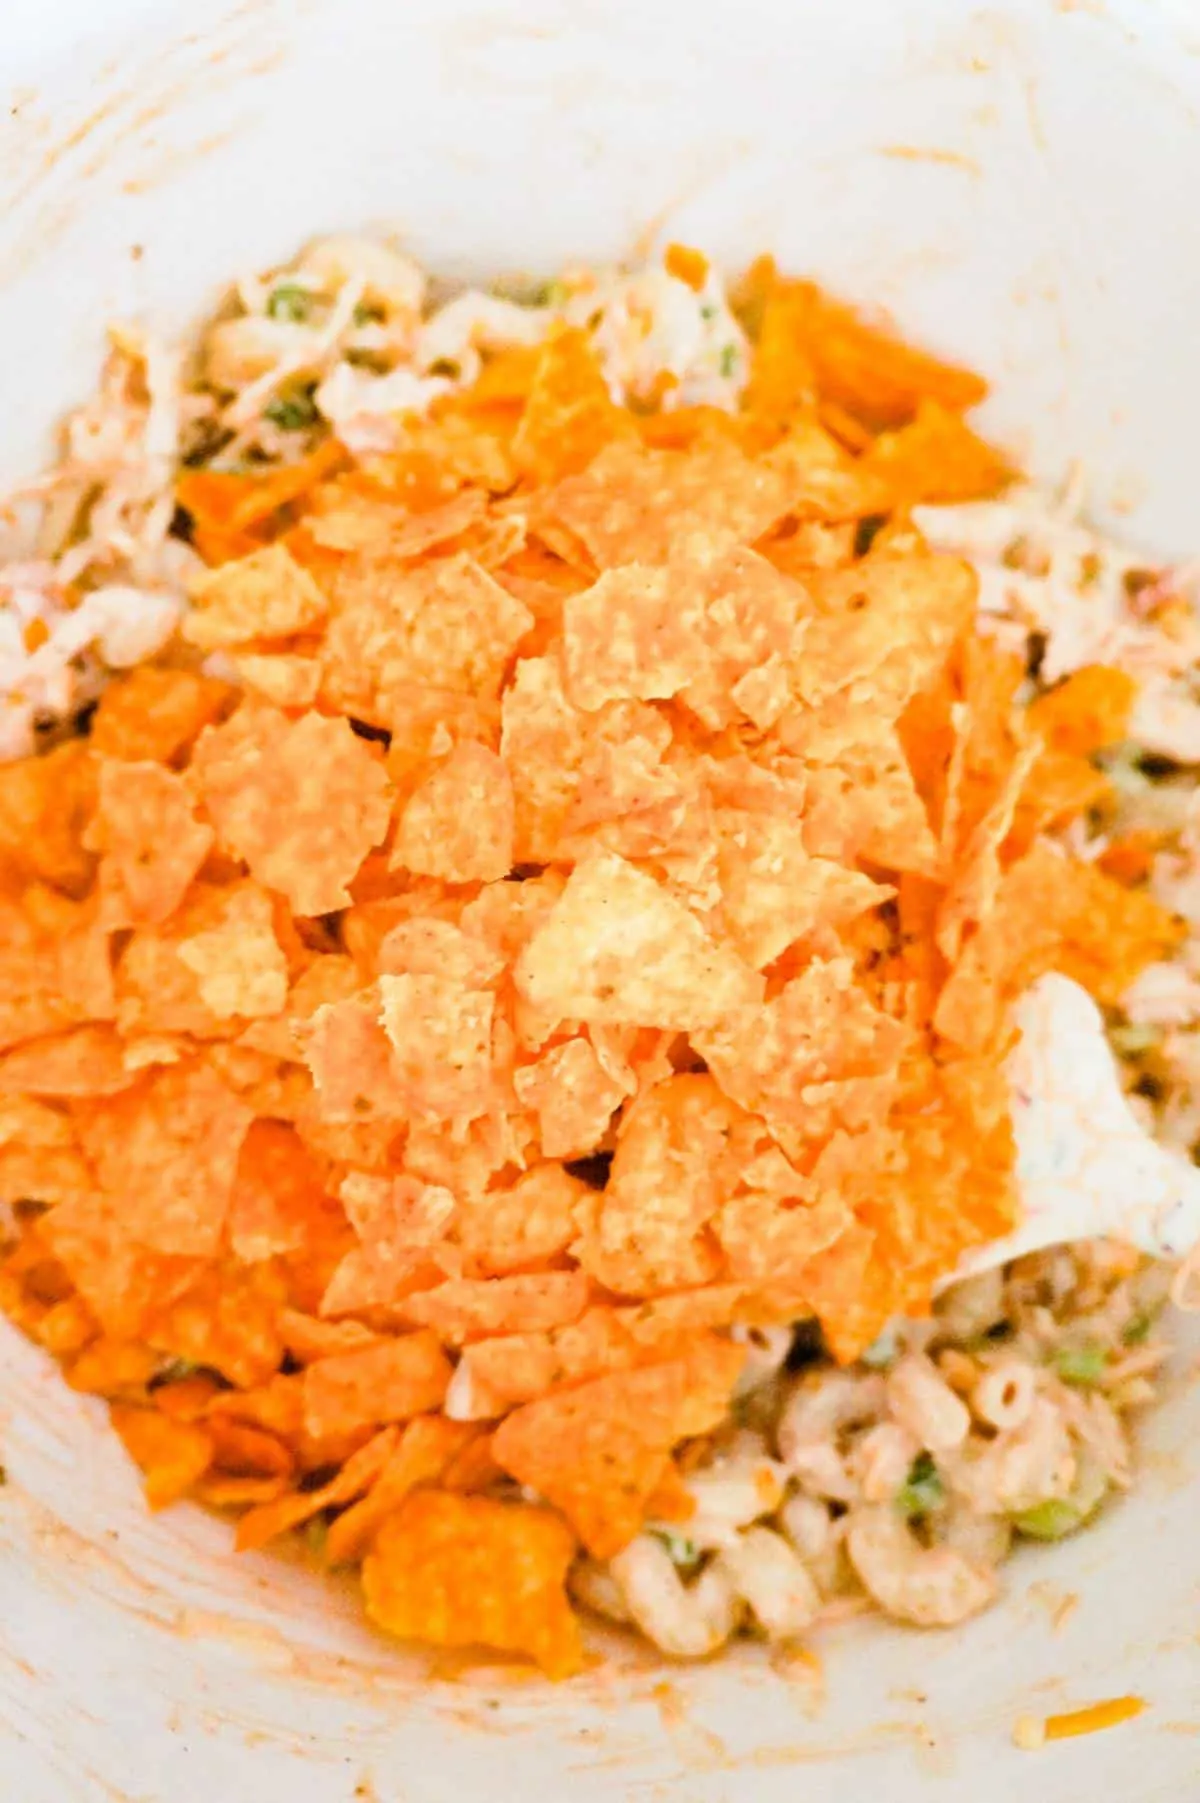 crumbled Doritos on top of pasta salad in a mixing bowl